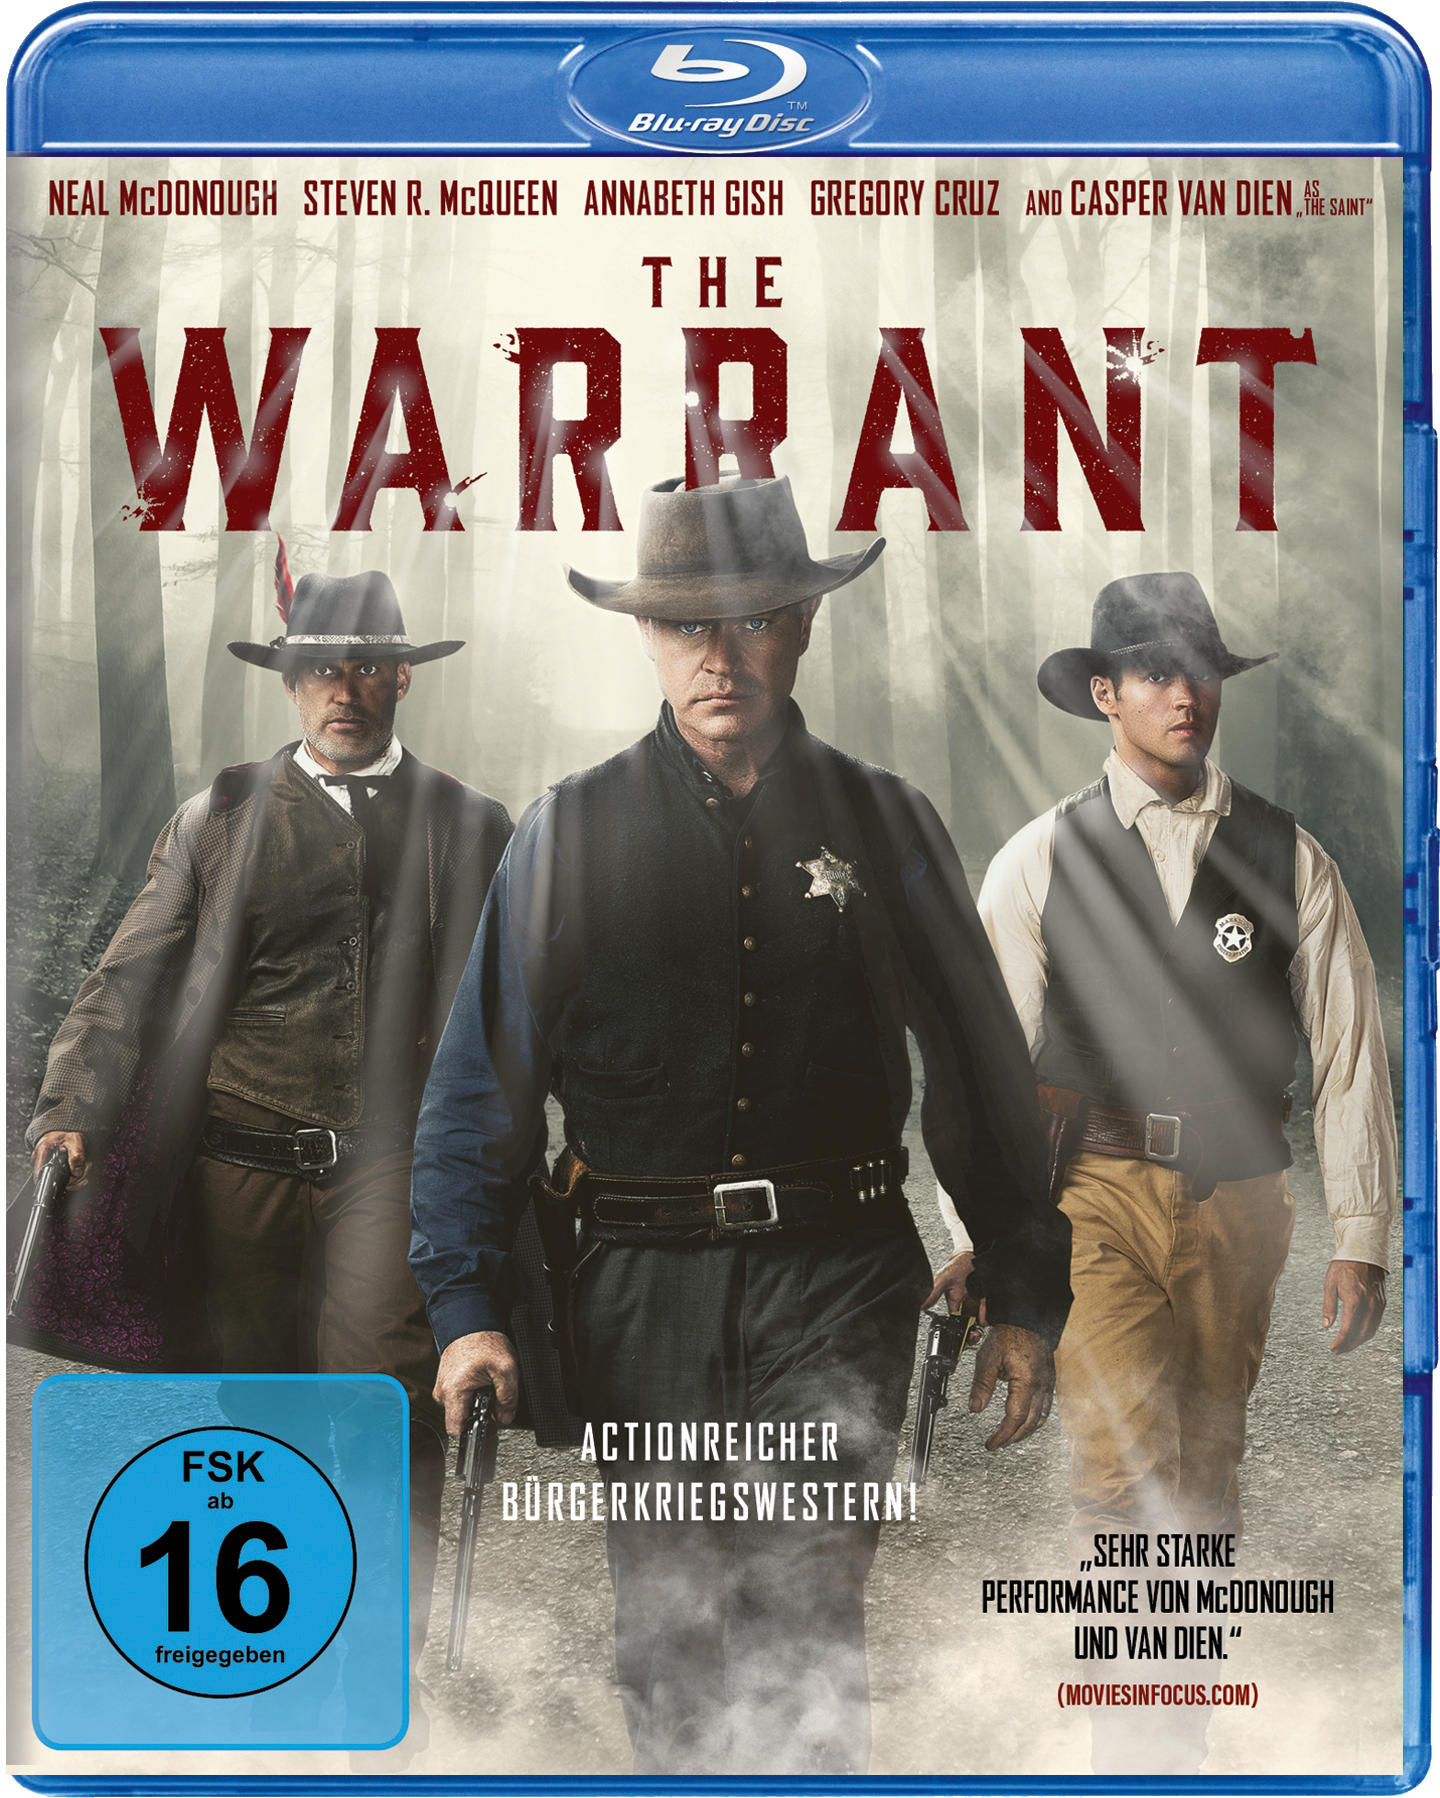 Blu-ray Warrant The